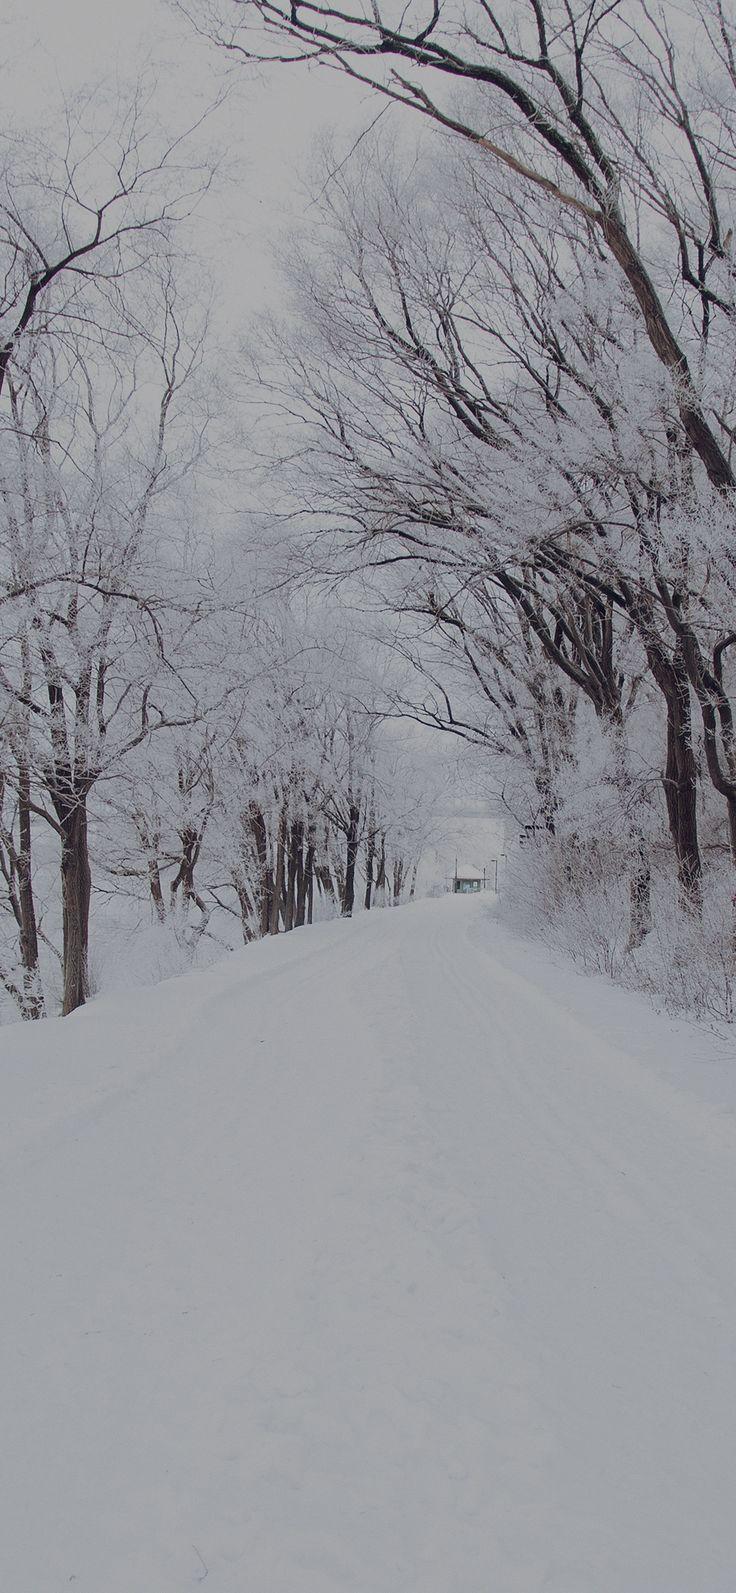 iPhone X wallpaper, winter road romantic nature mountain